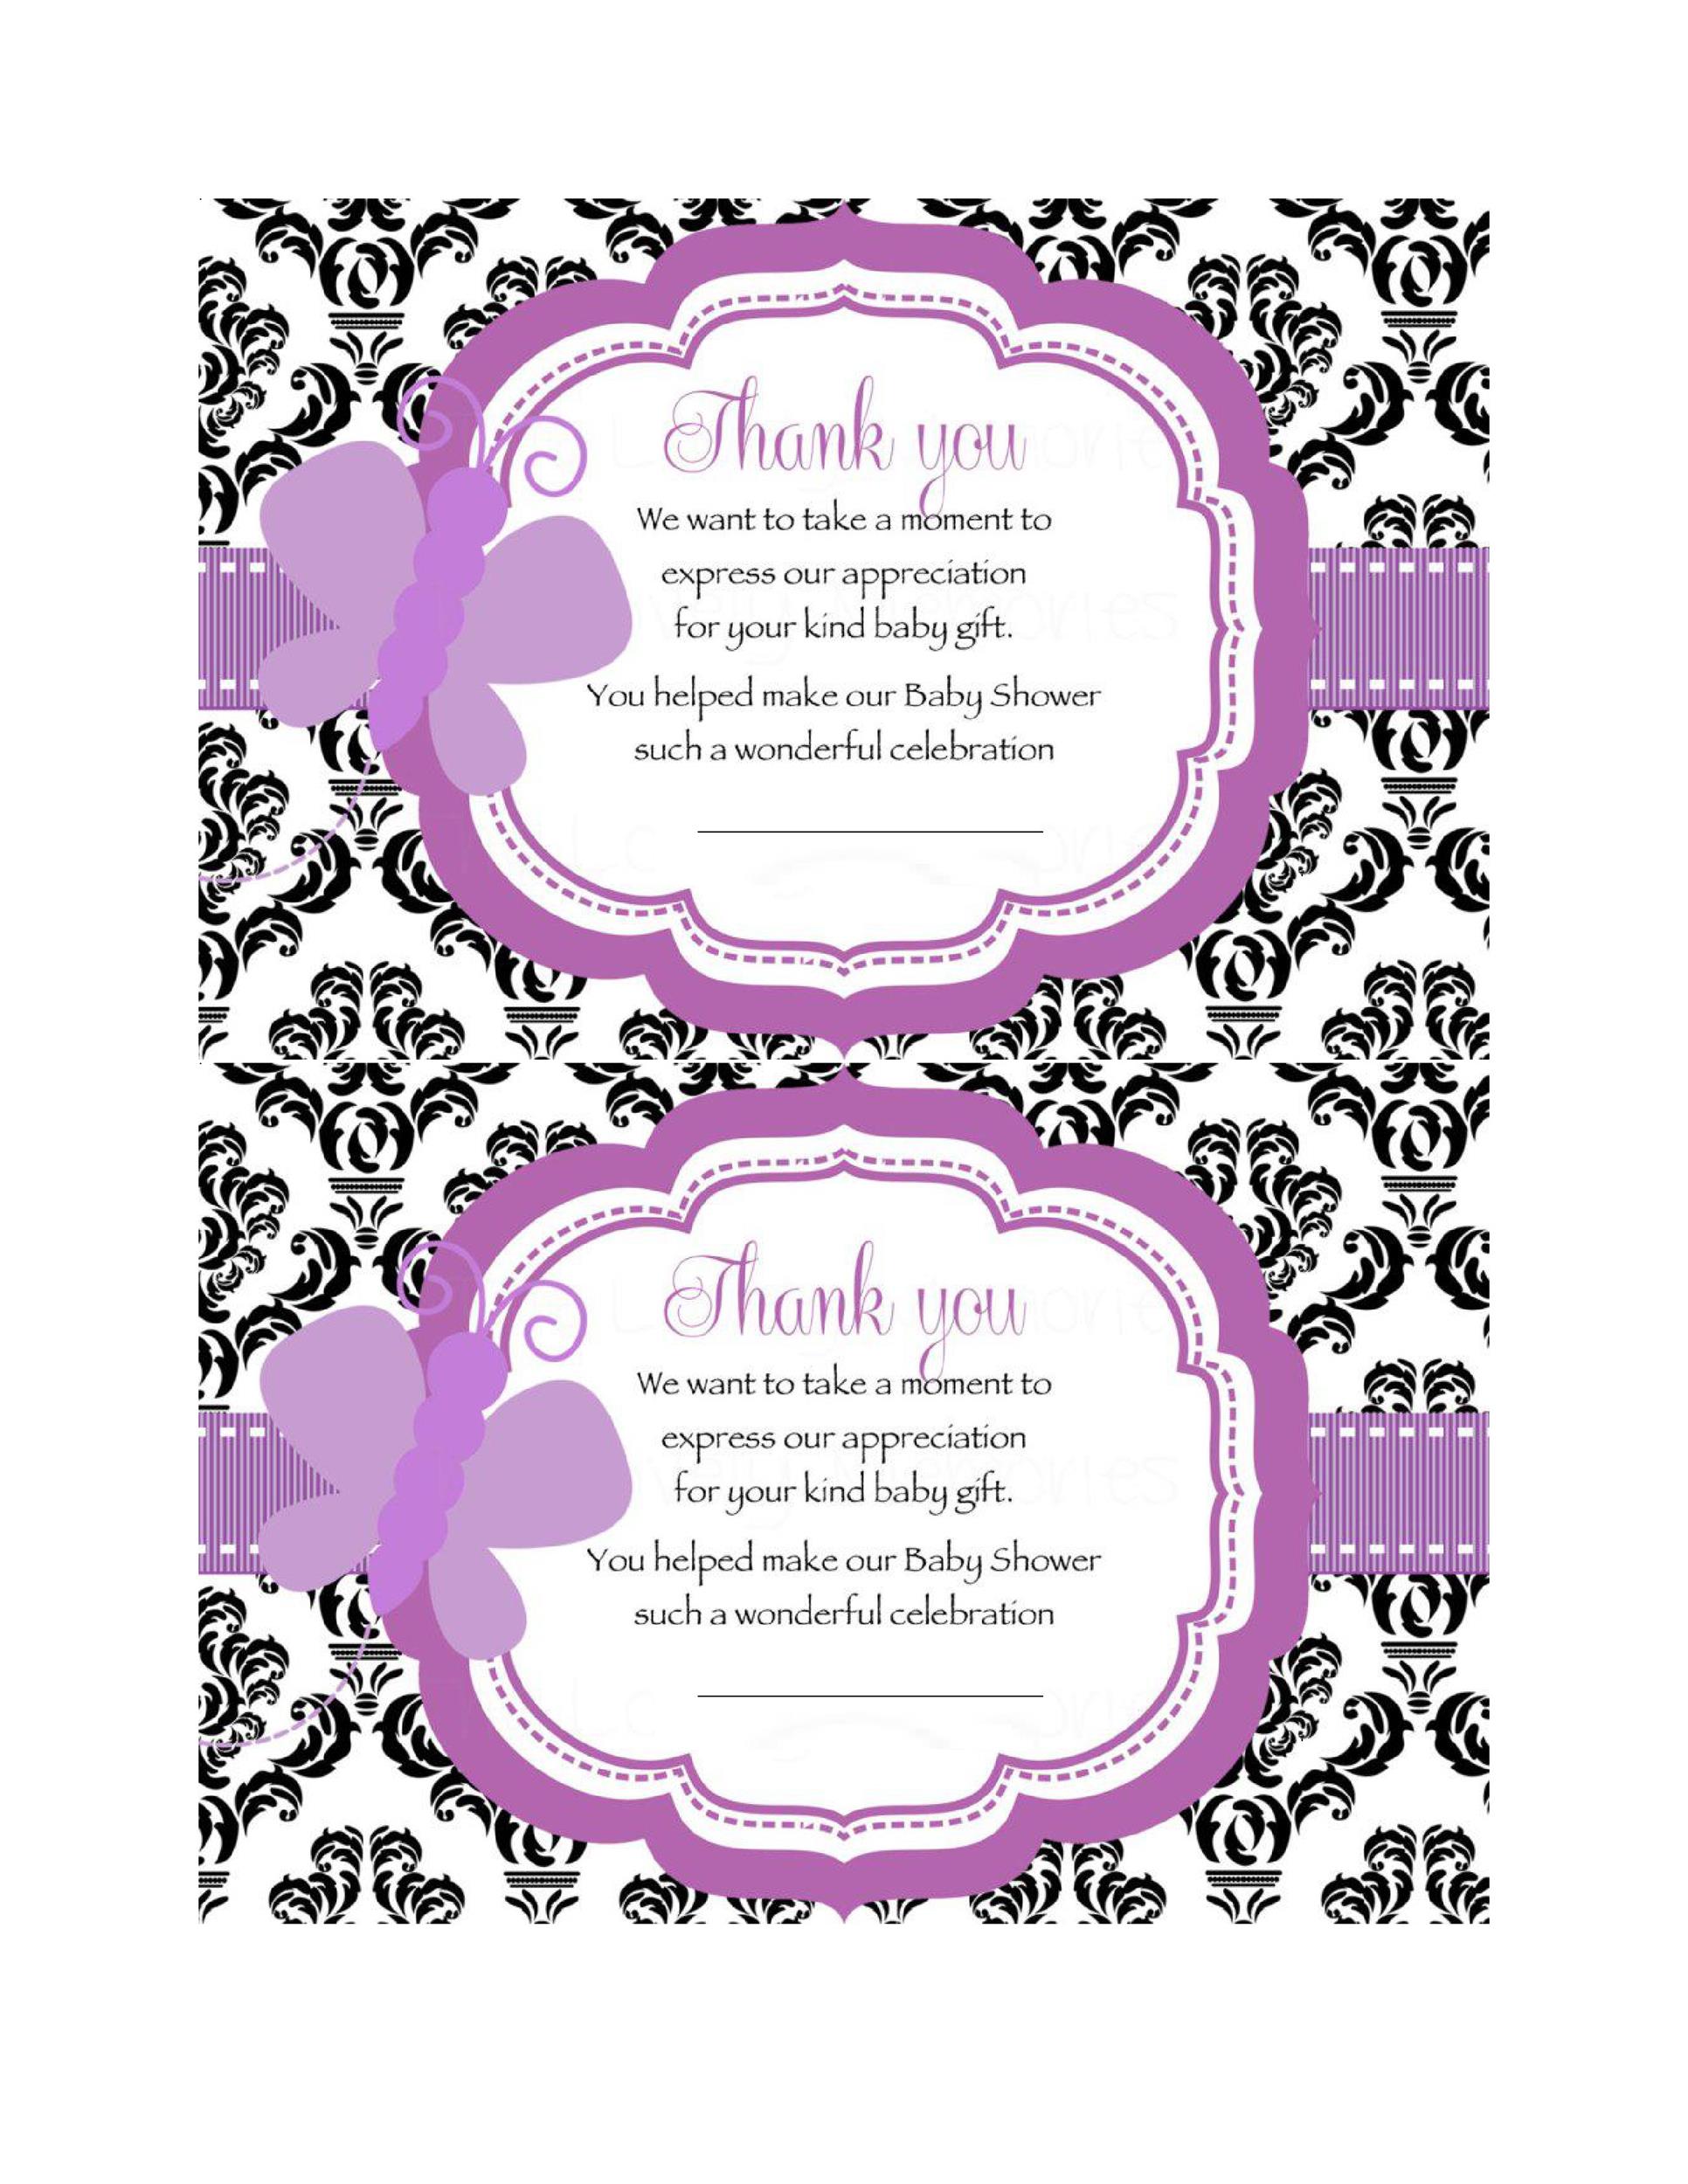 30-free-printable-thank-you-card-templates-wedding-graduation-business